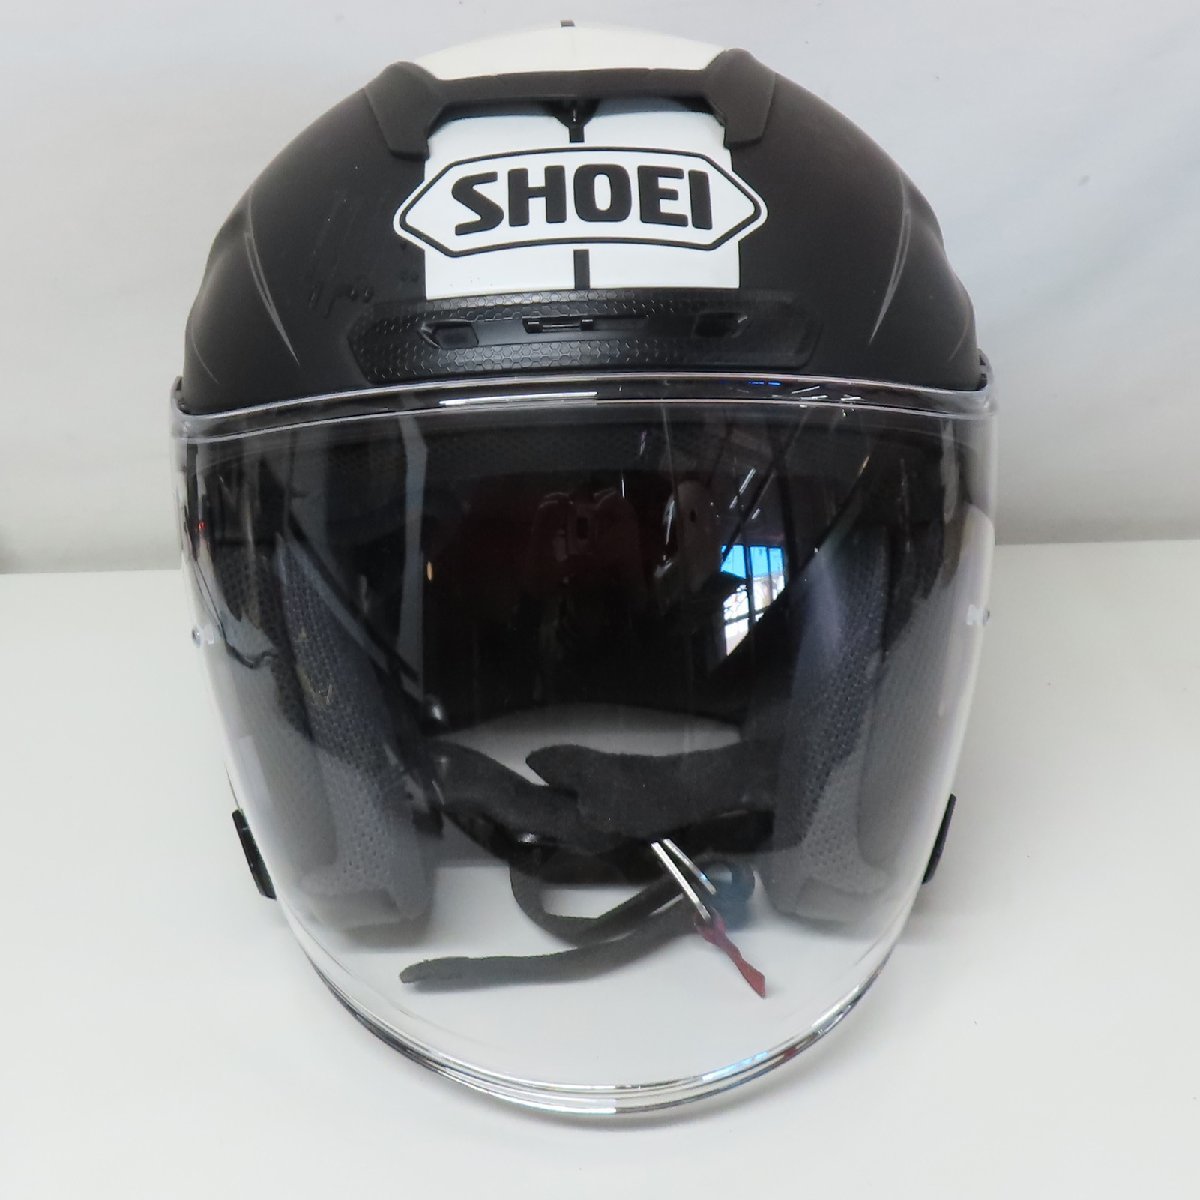 SHOEI ショウエイ J-FORCE4 MODERNO Jフォース4 モデルノ ジェットヘルメット XLサイズ 人気 バイク 二輪 スクーター 原付 オートバイ_画像6